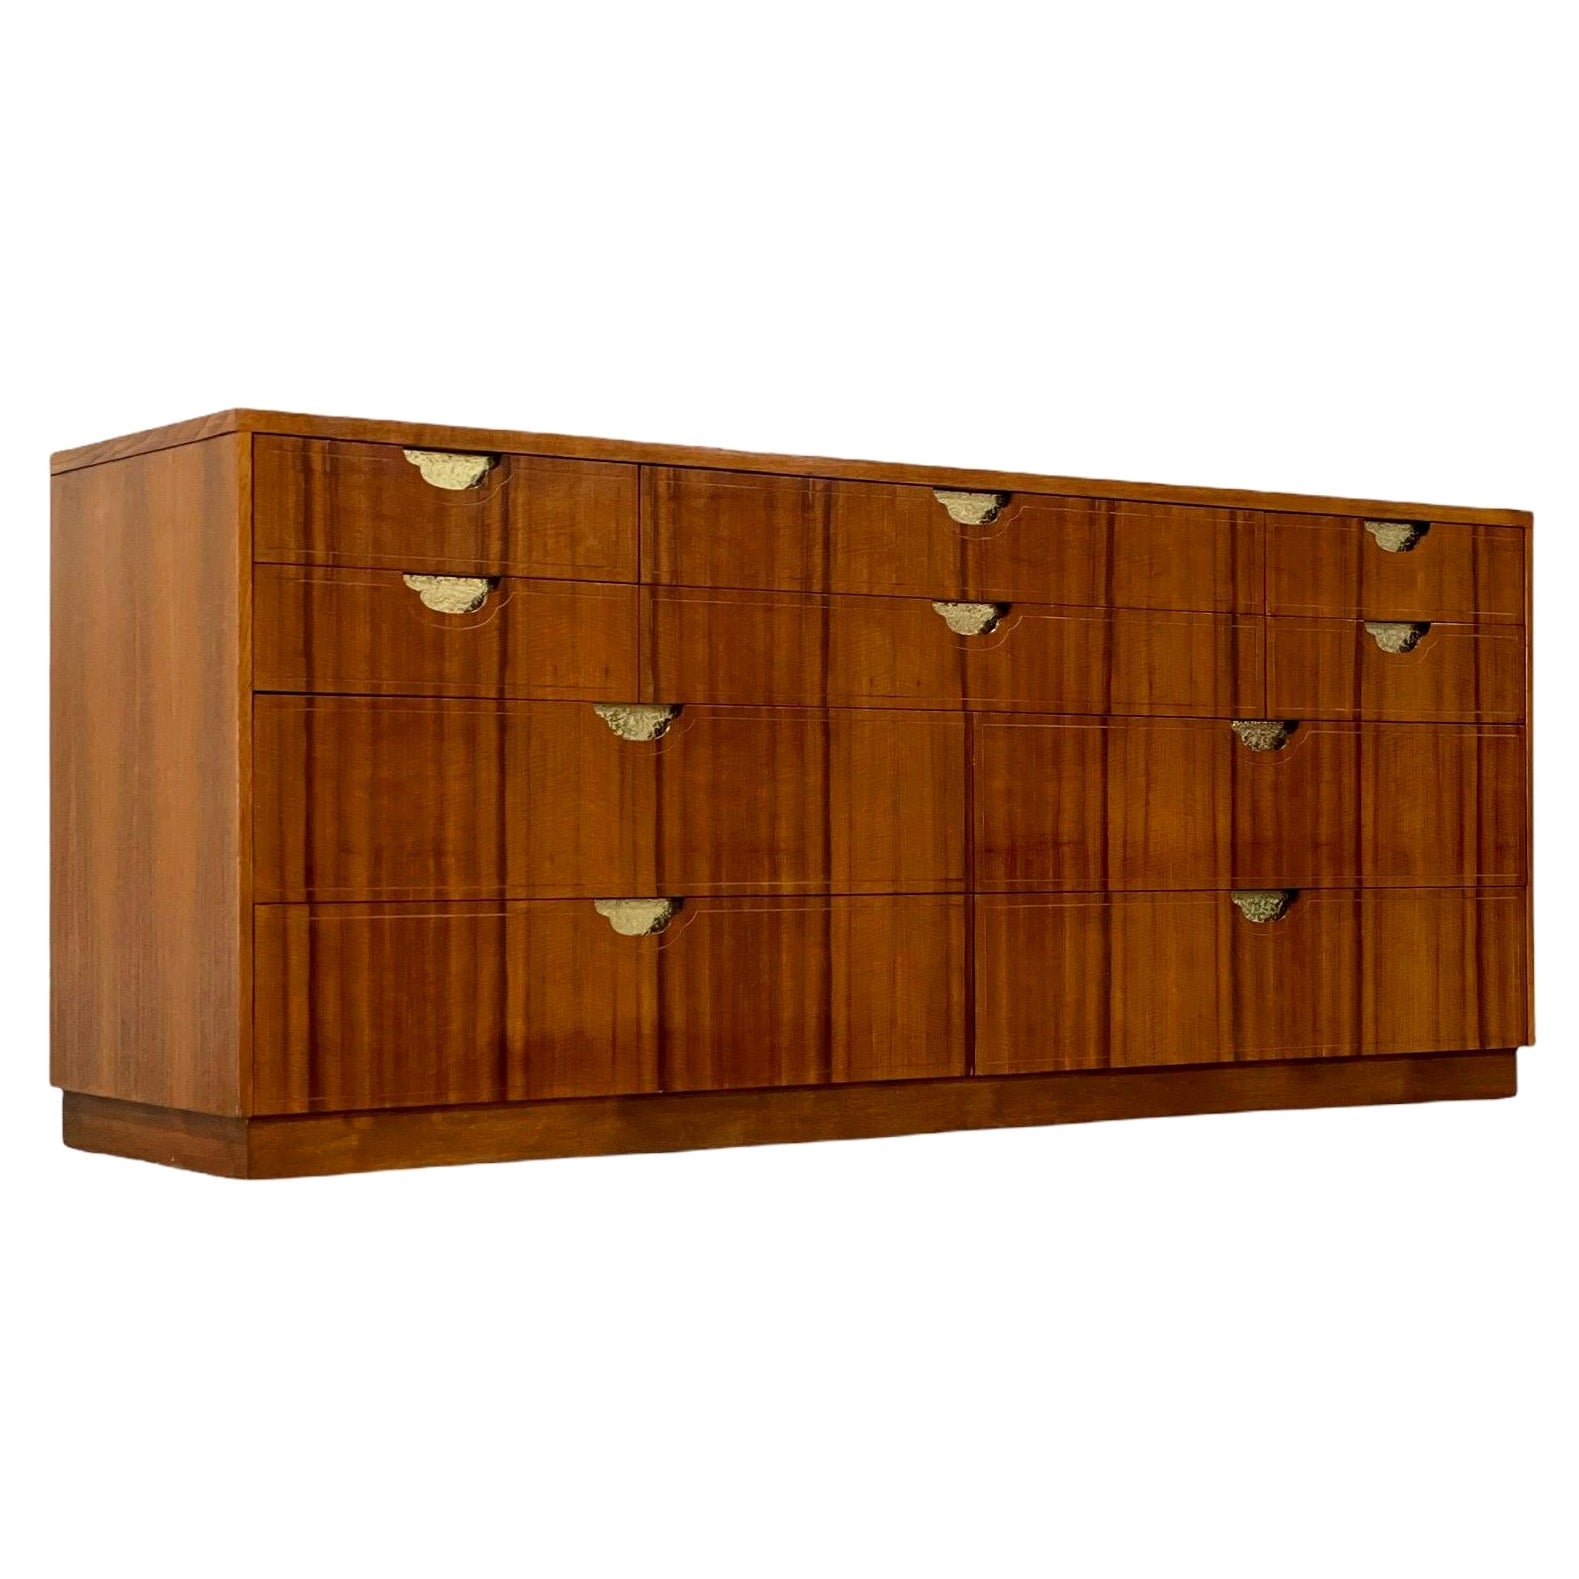 Baker Furniture, Vintage Modern Ten Drawer Dresser in Walnut and Hammered Brass